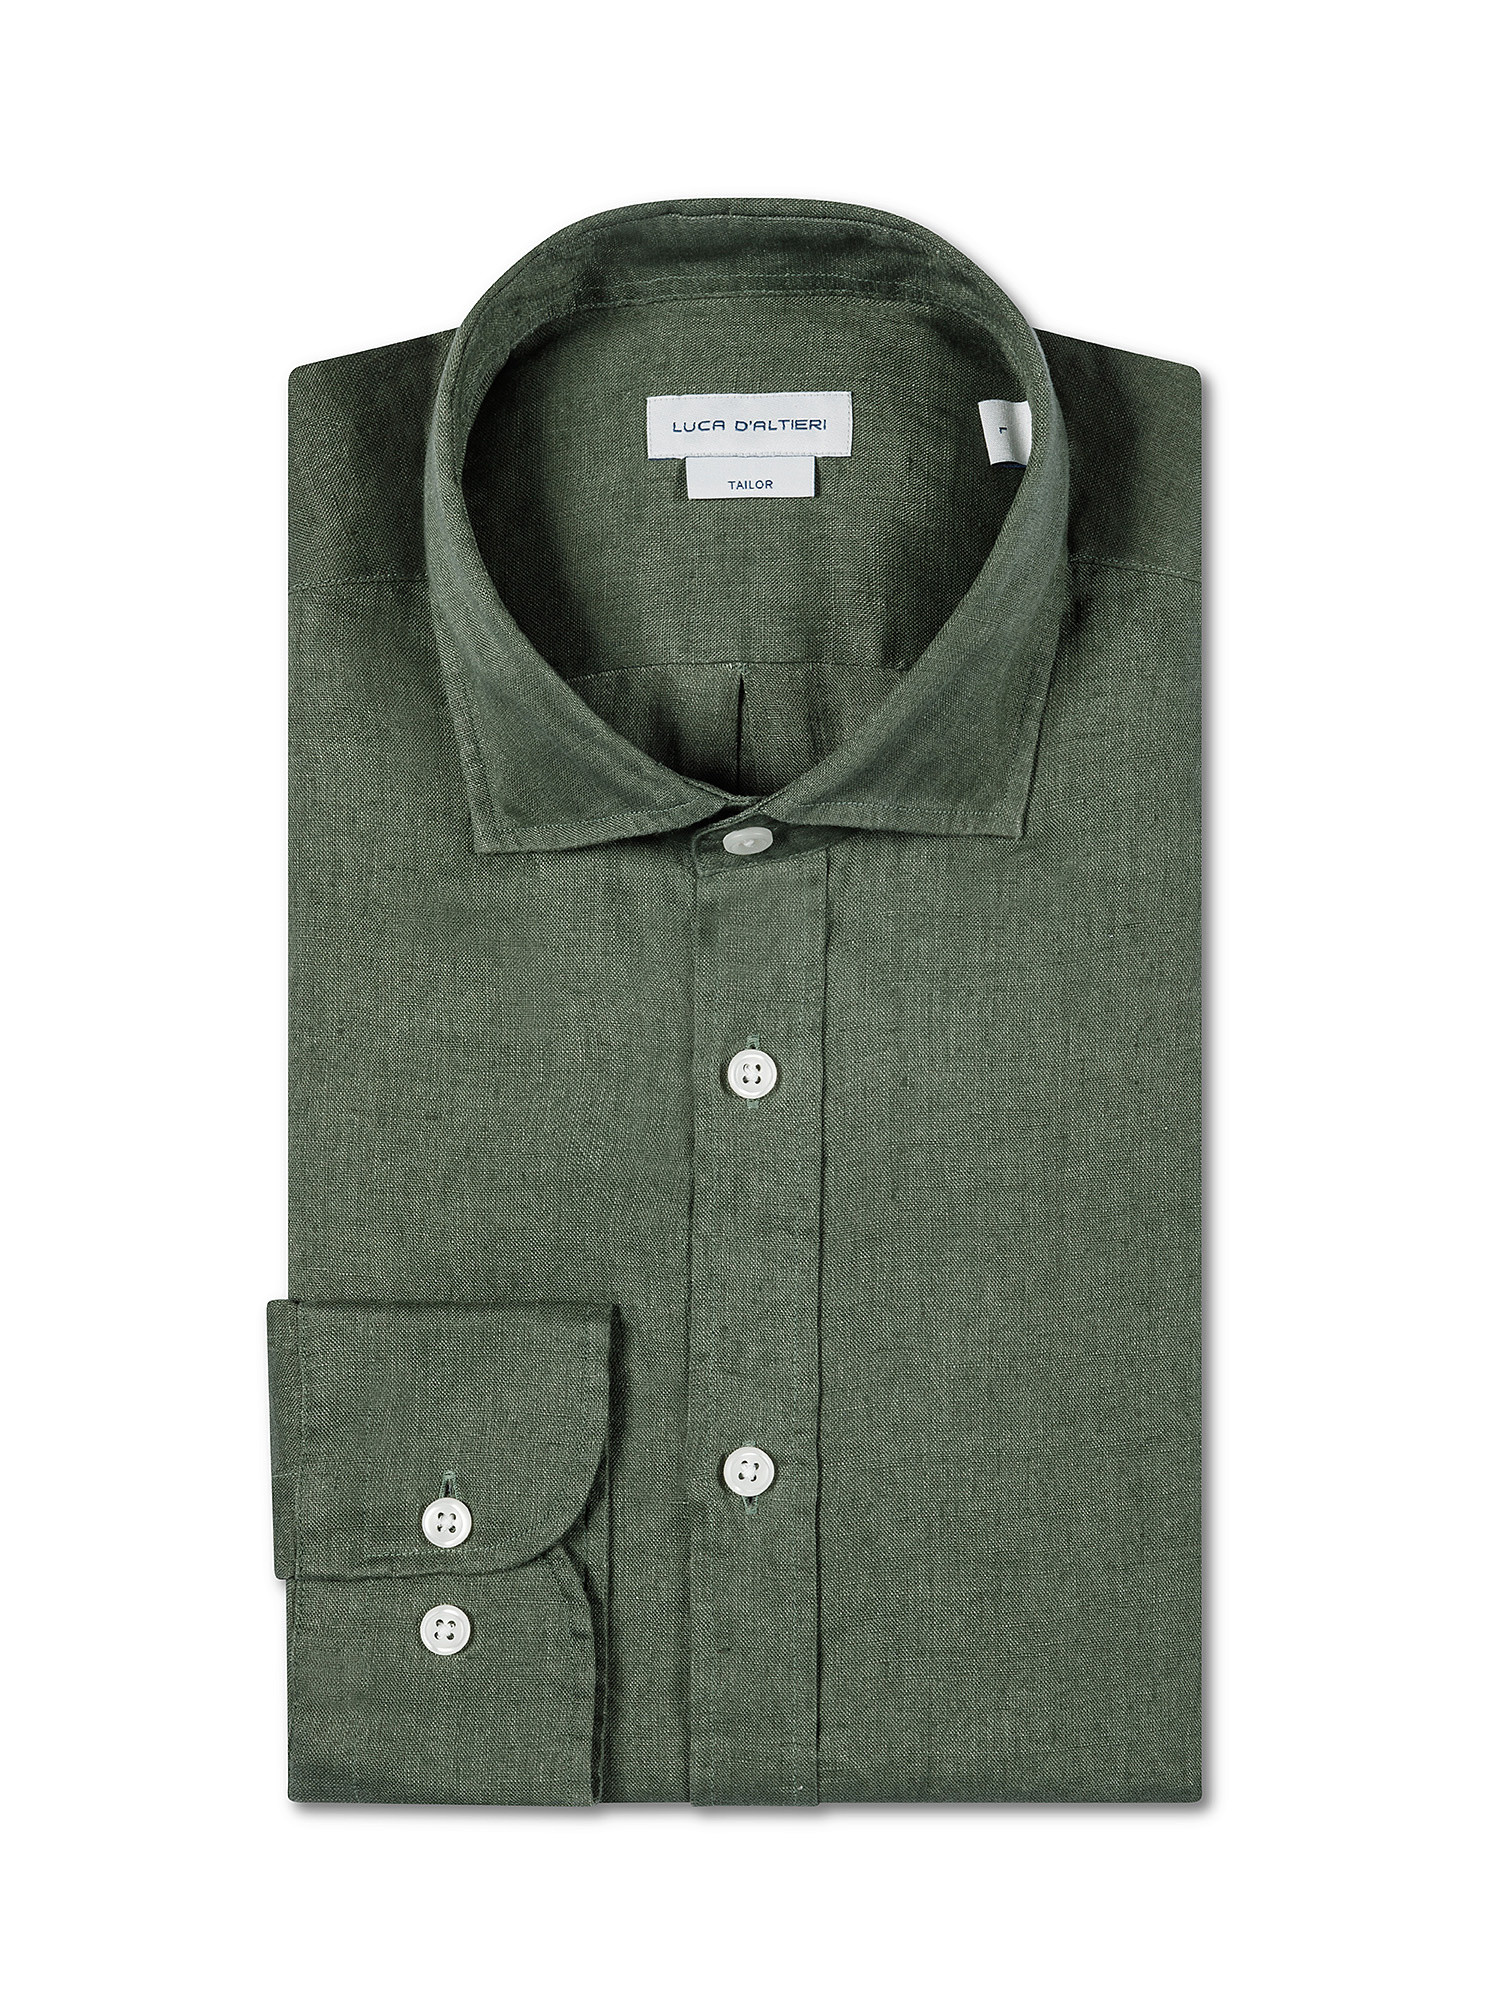 Luca D'Altieri - Camicia tailor fit in puro lino, Verde, large image number 2